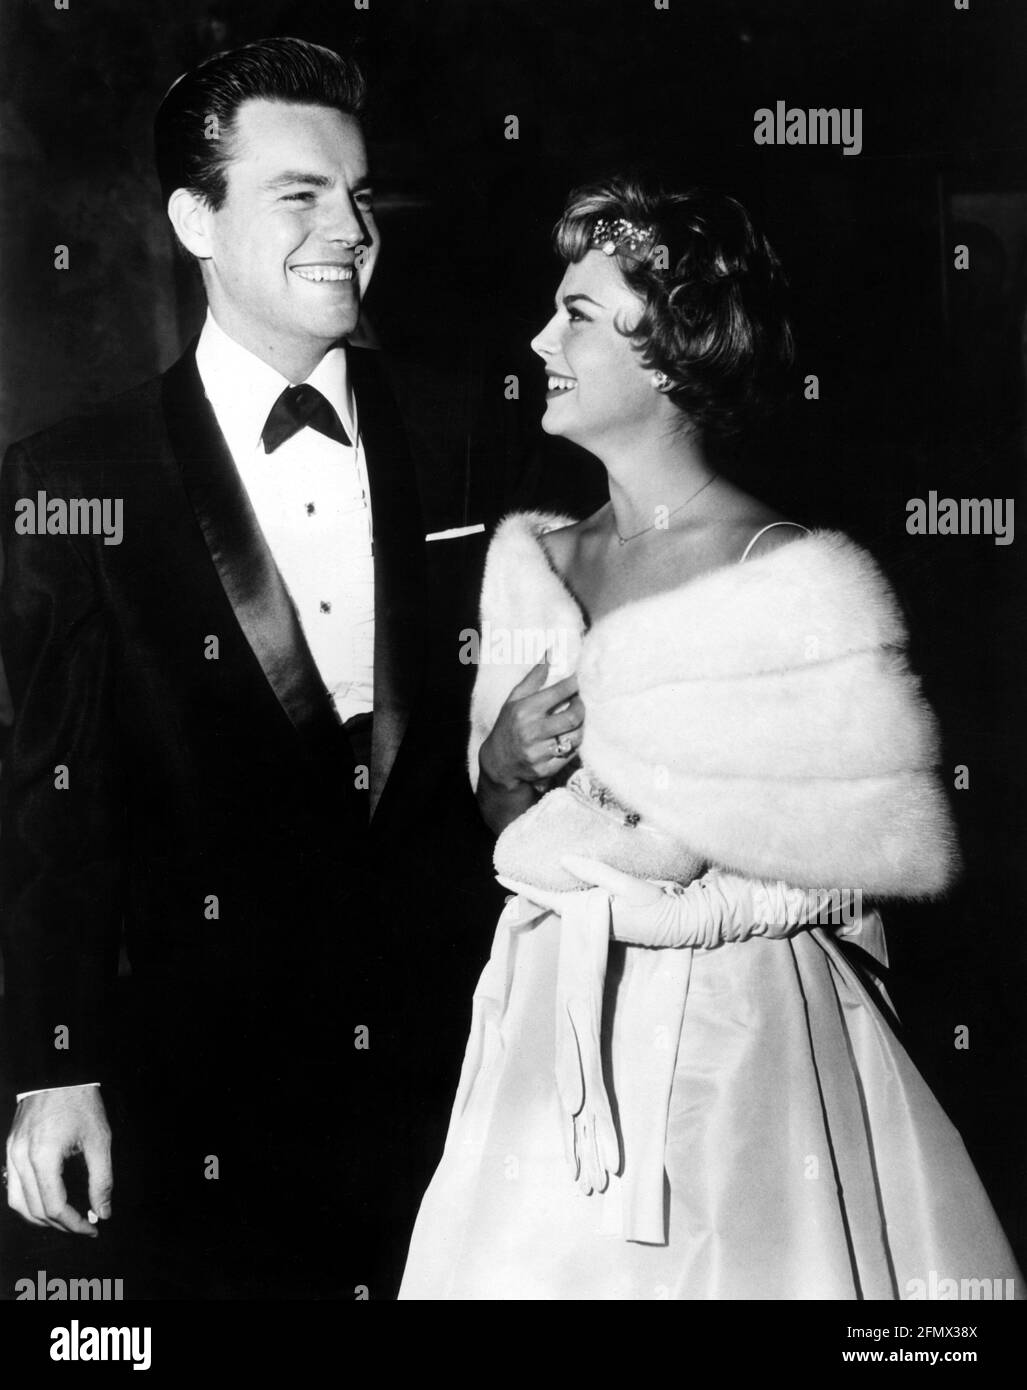 Wagner, Robert, * 10.2.1930, amerikanischer Schauspieler, mit seiner Frau Natalie Wood, 60er Jahre, Fell, Stola, ADDITIONAL-RIGHTS-CLEARANCE-INFO-NOT-AVAILABLE Stockfoto